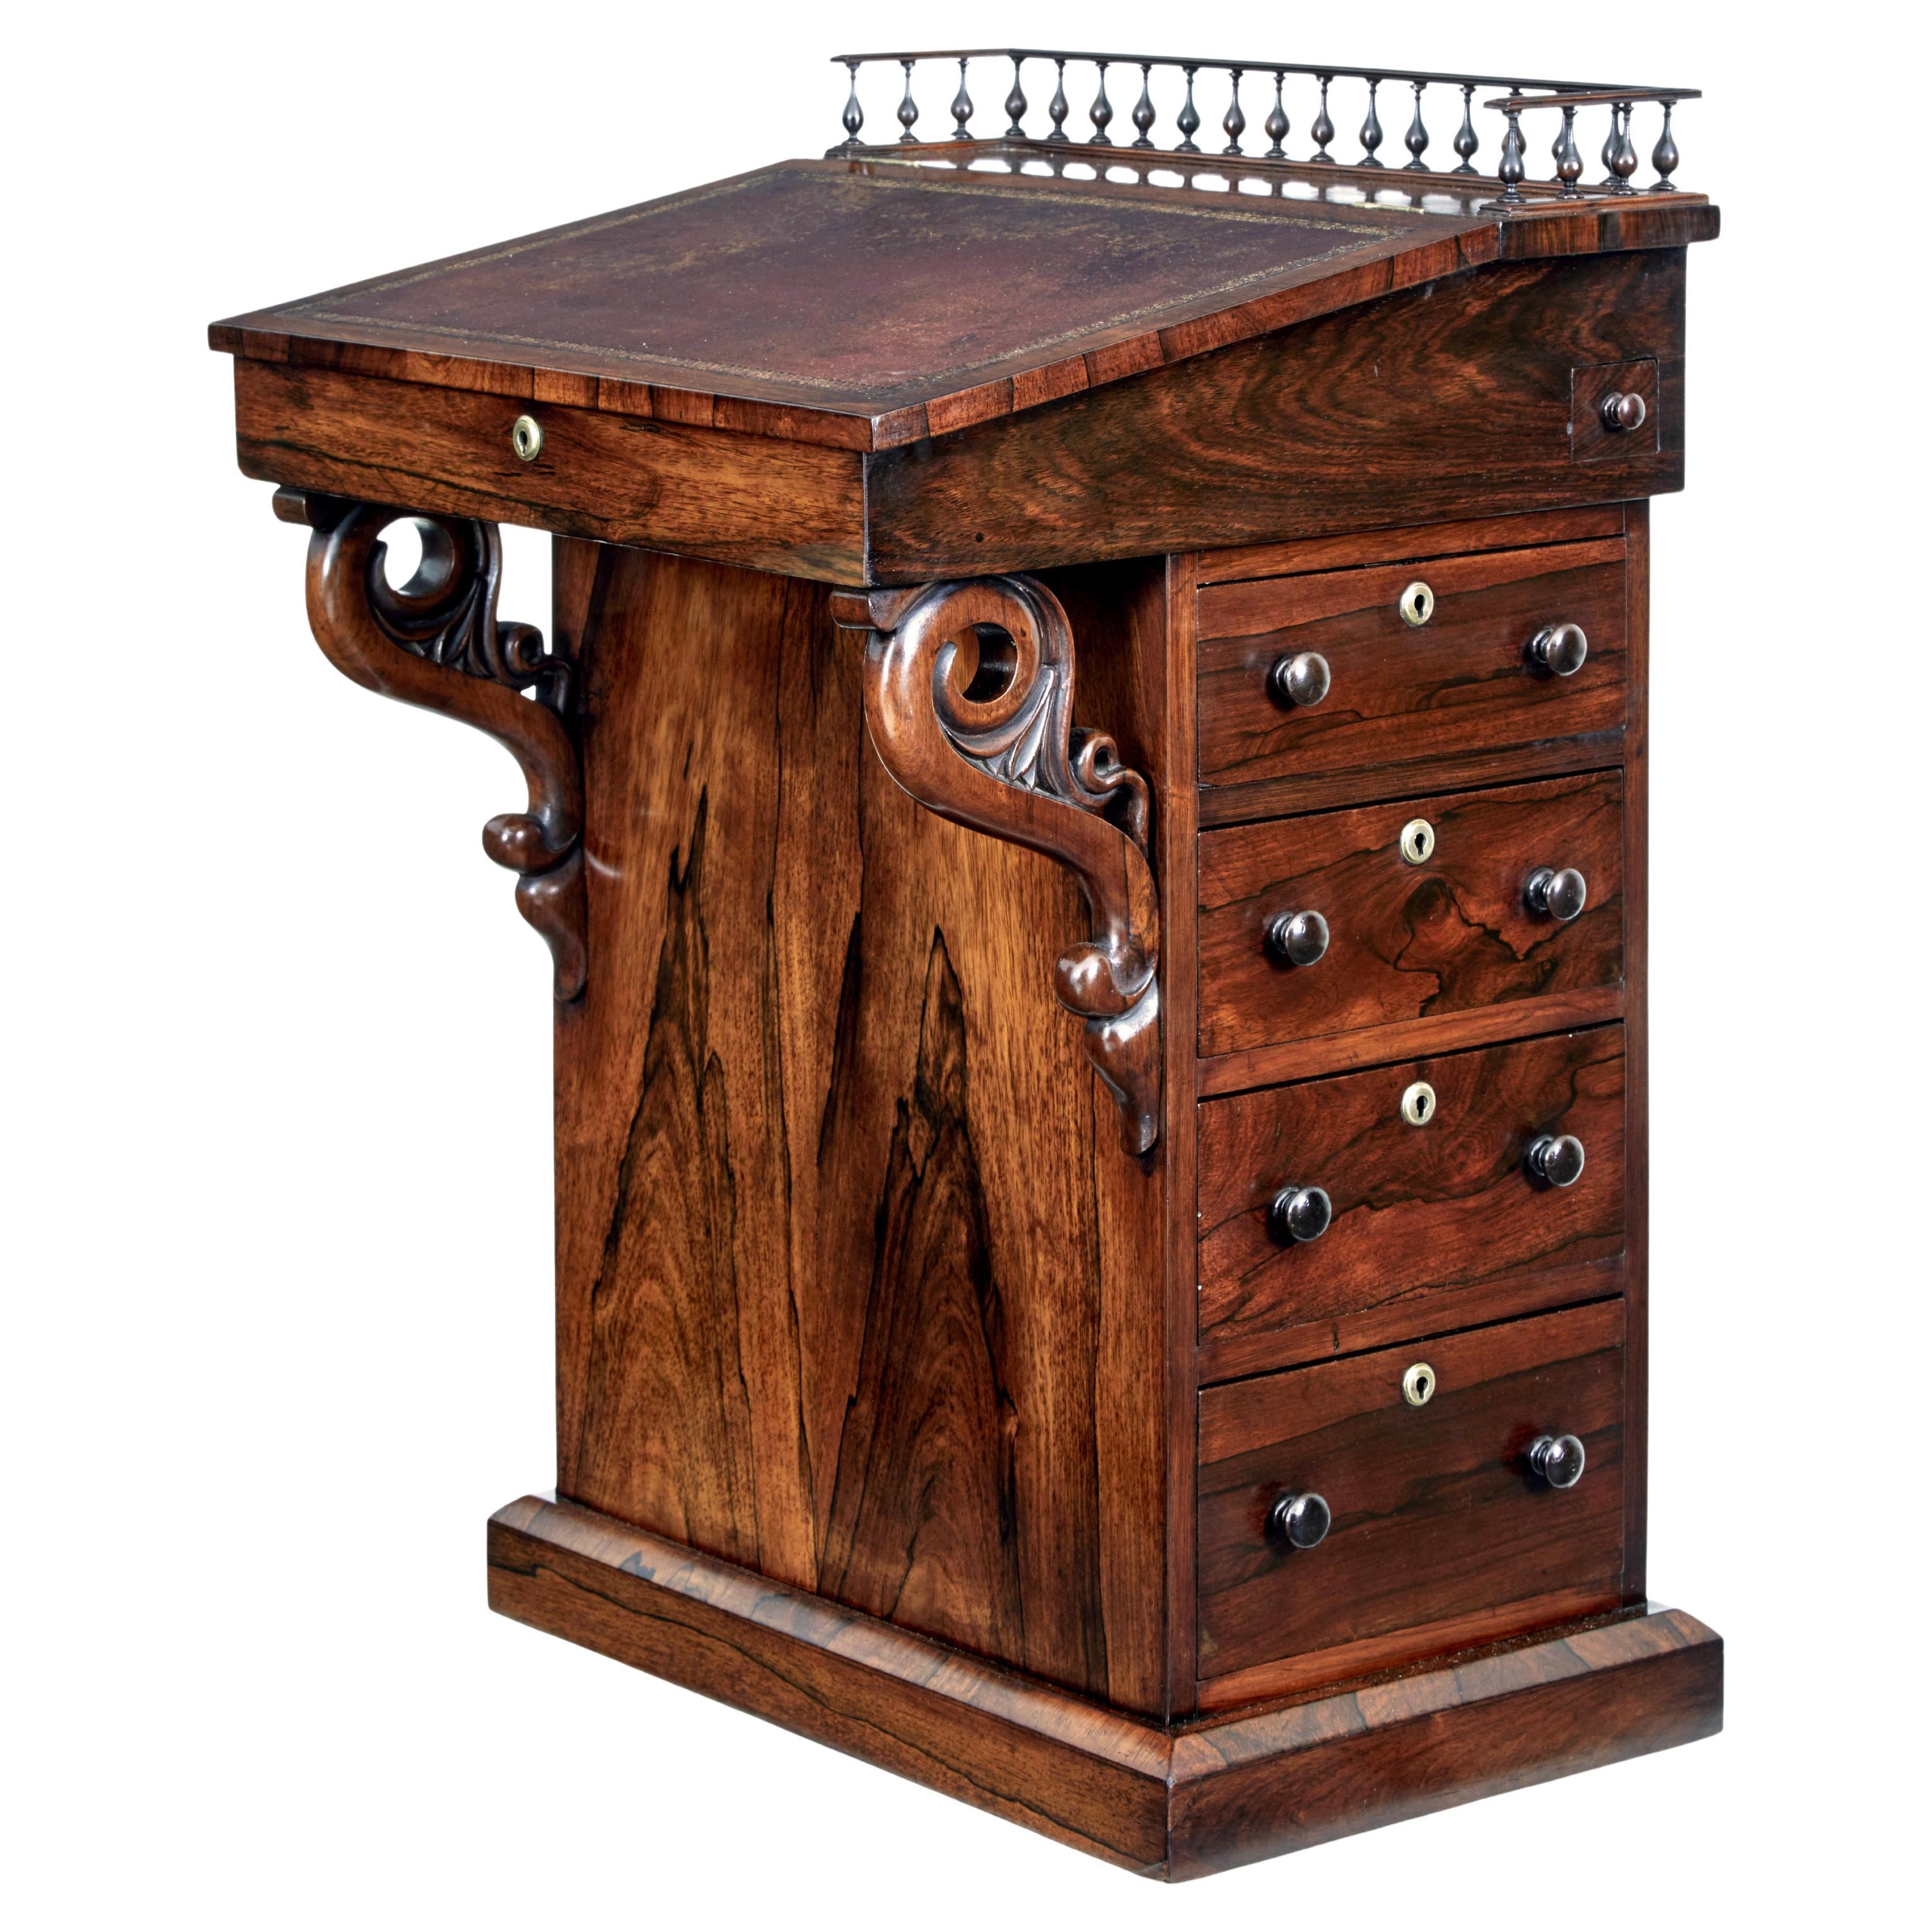 Early 19th century Regency davenport writing desk For Sale